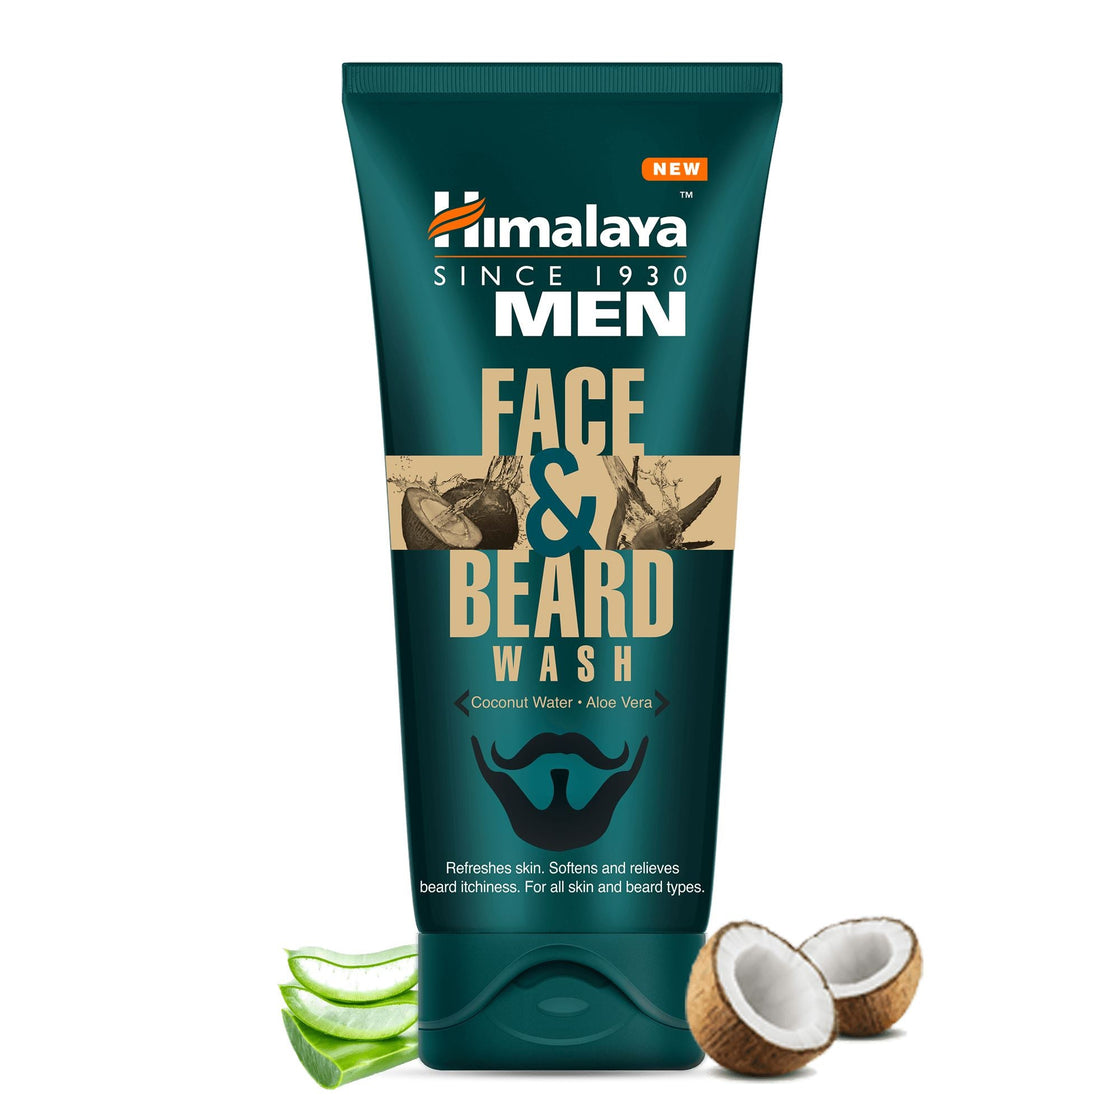  Himalaya Men Face & Beard Wash 